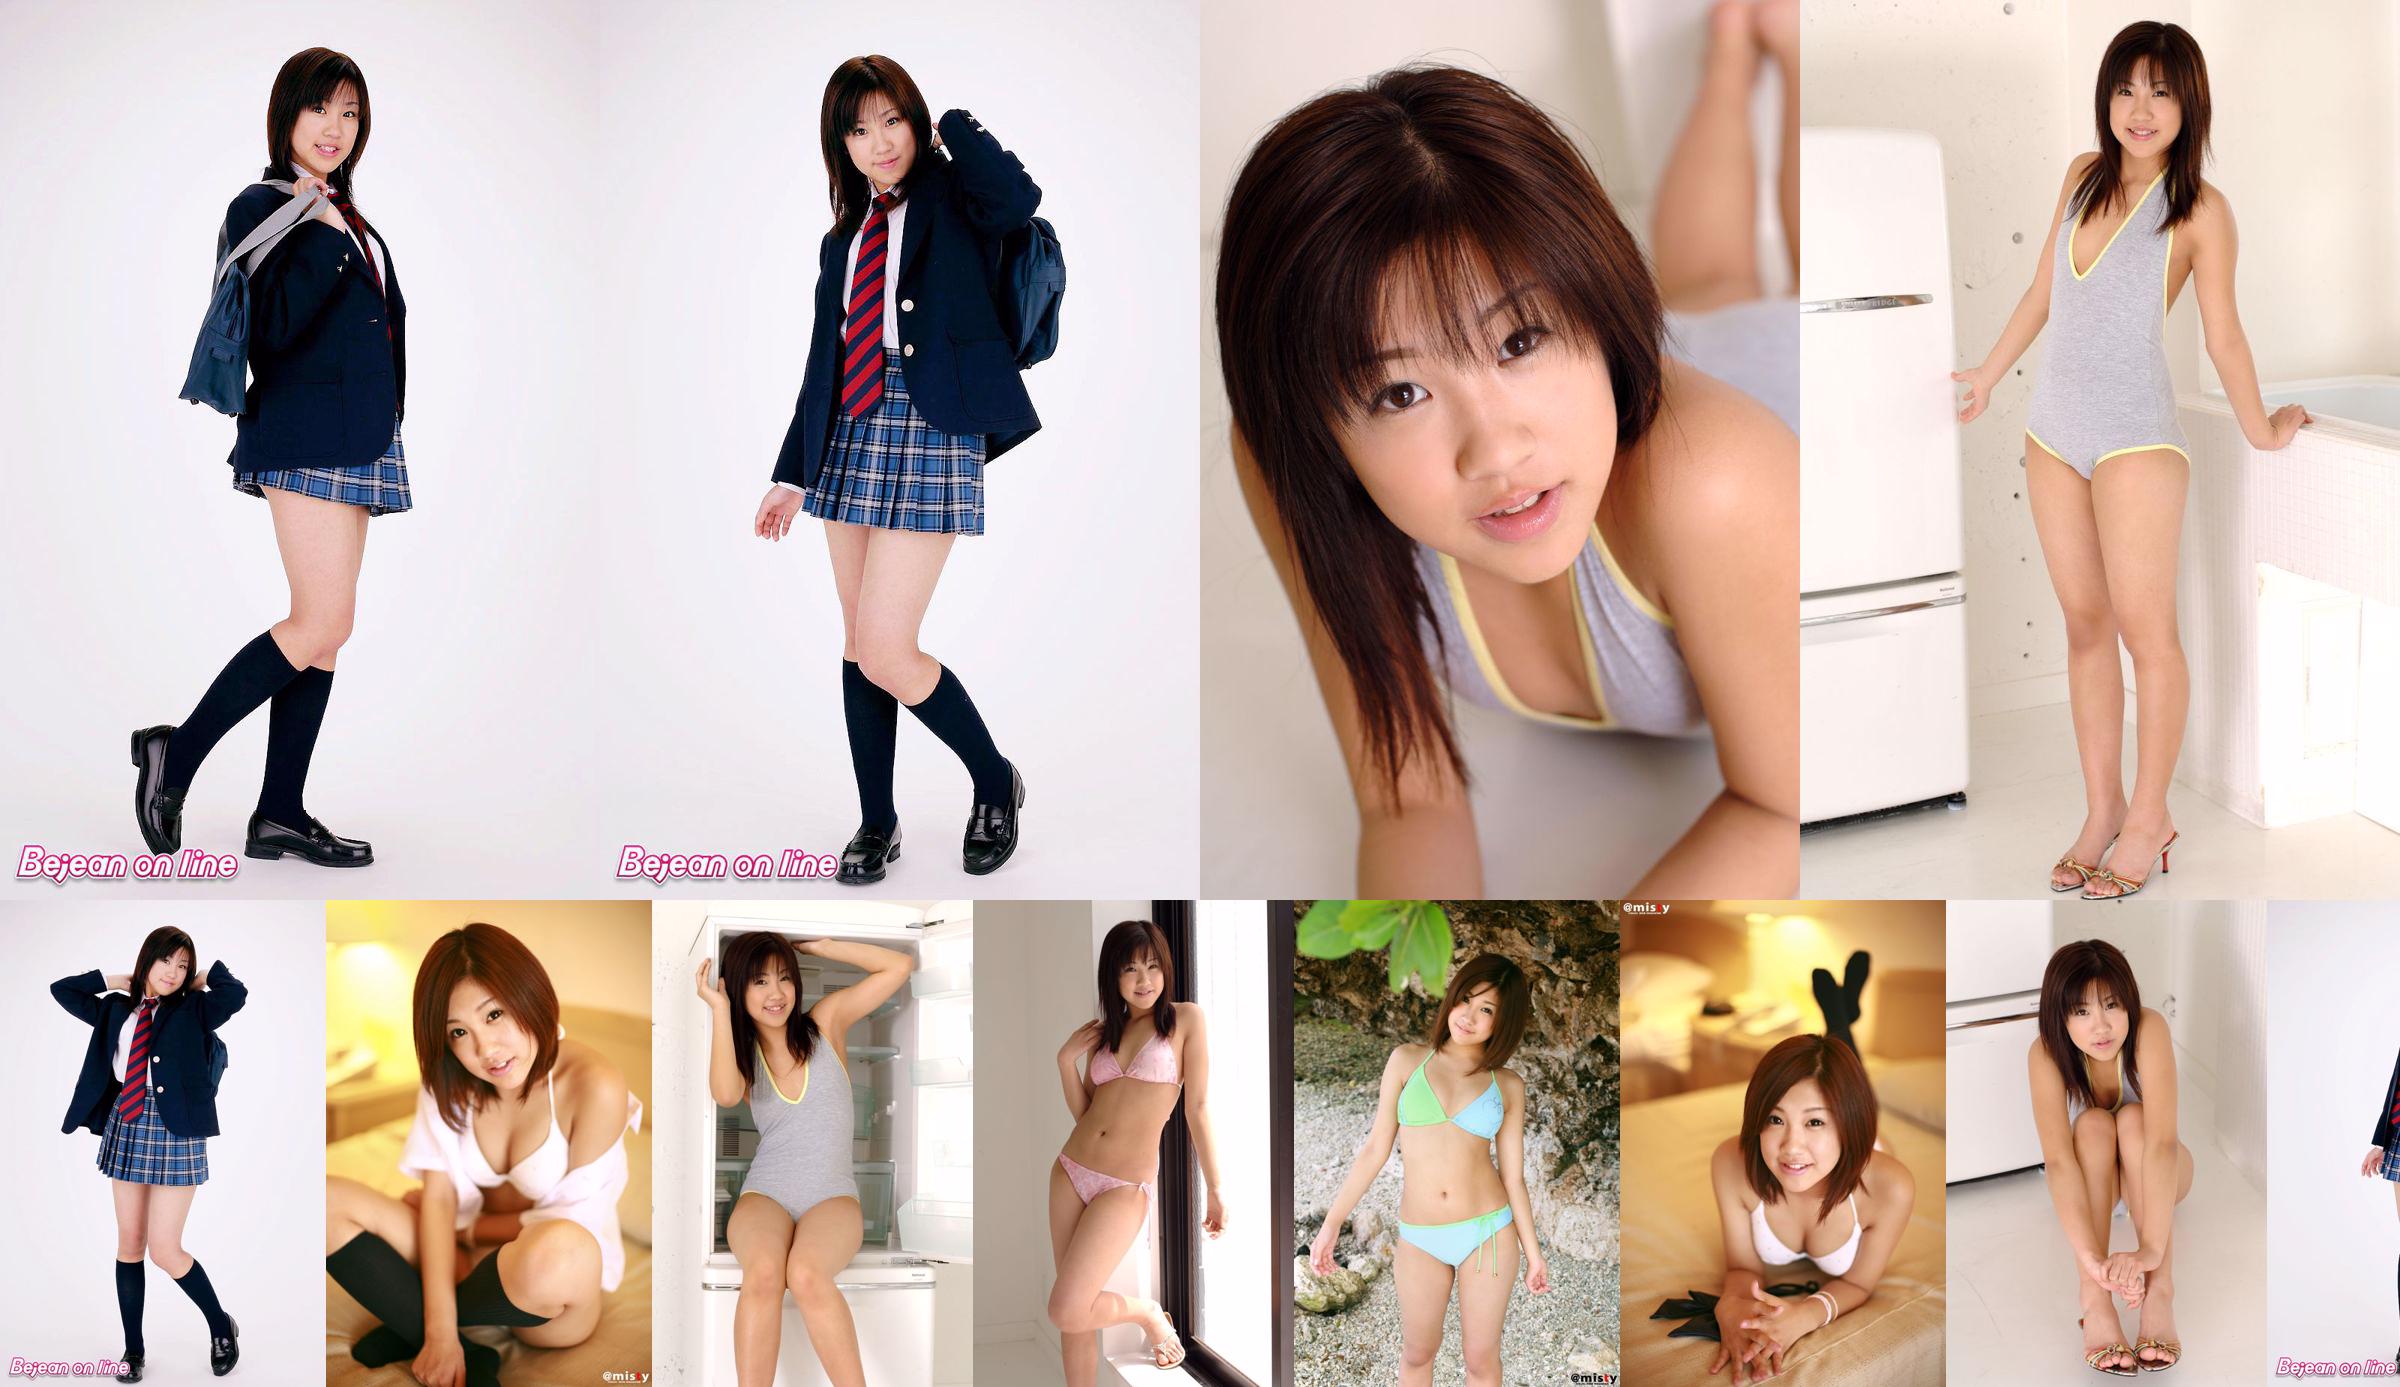 Scuola privata femminile Bejean Maho Nagase Maho Nagase [Bejean On Line] No.7acb0c Pagina 2